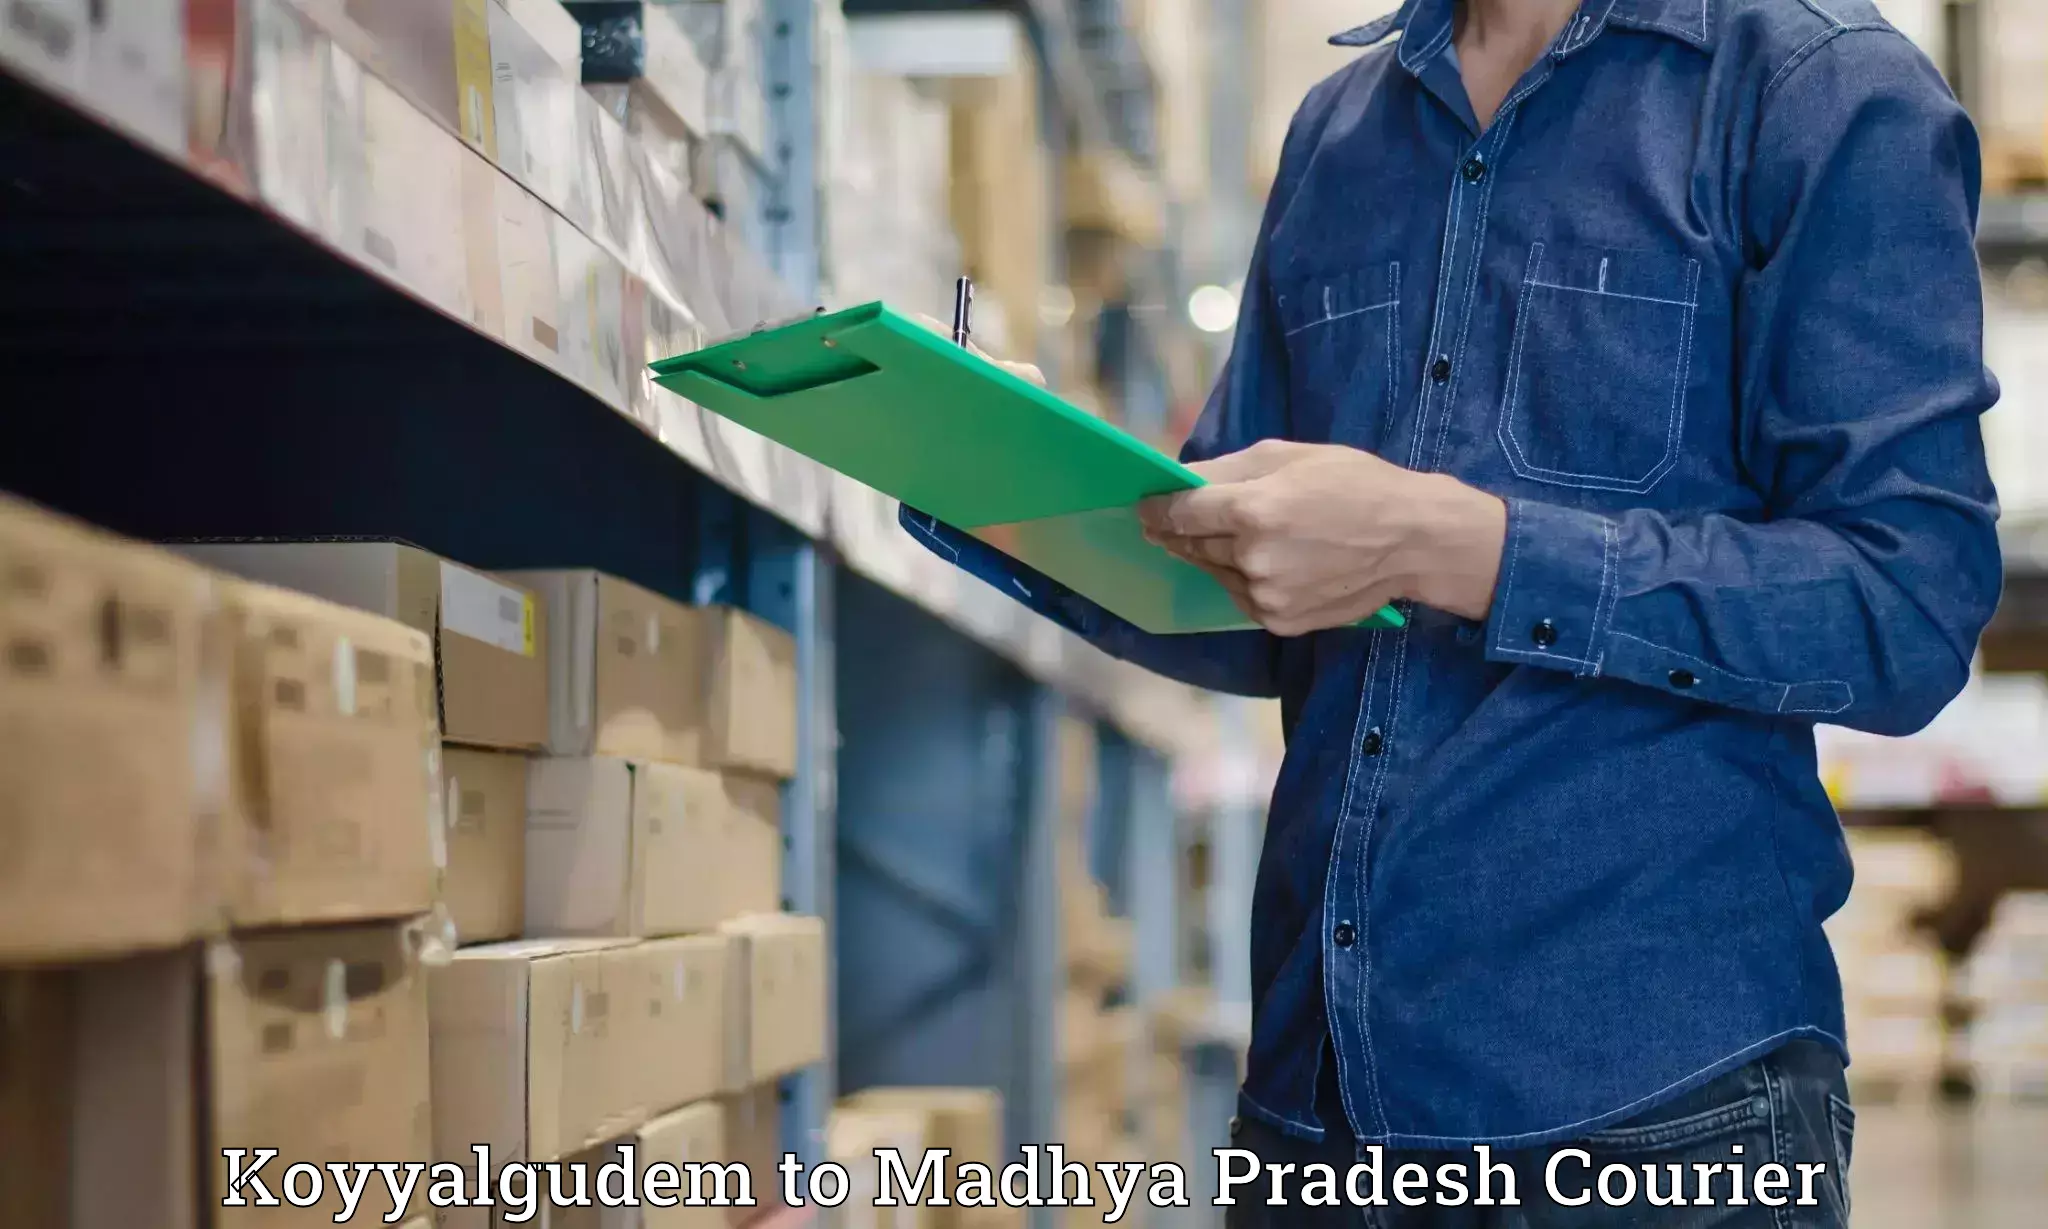 Affordable parcel service Koyyalgudem to Mandideep